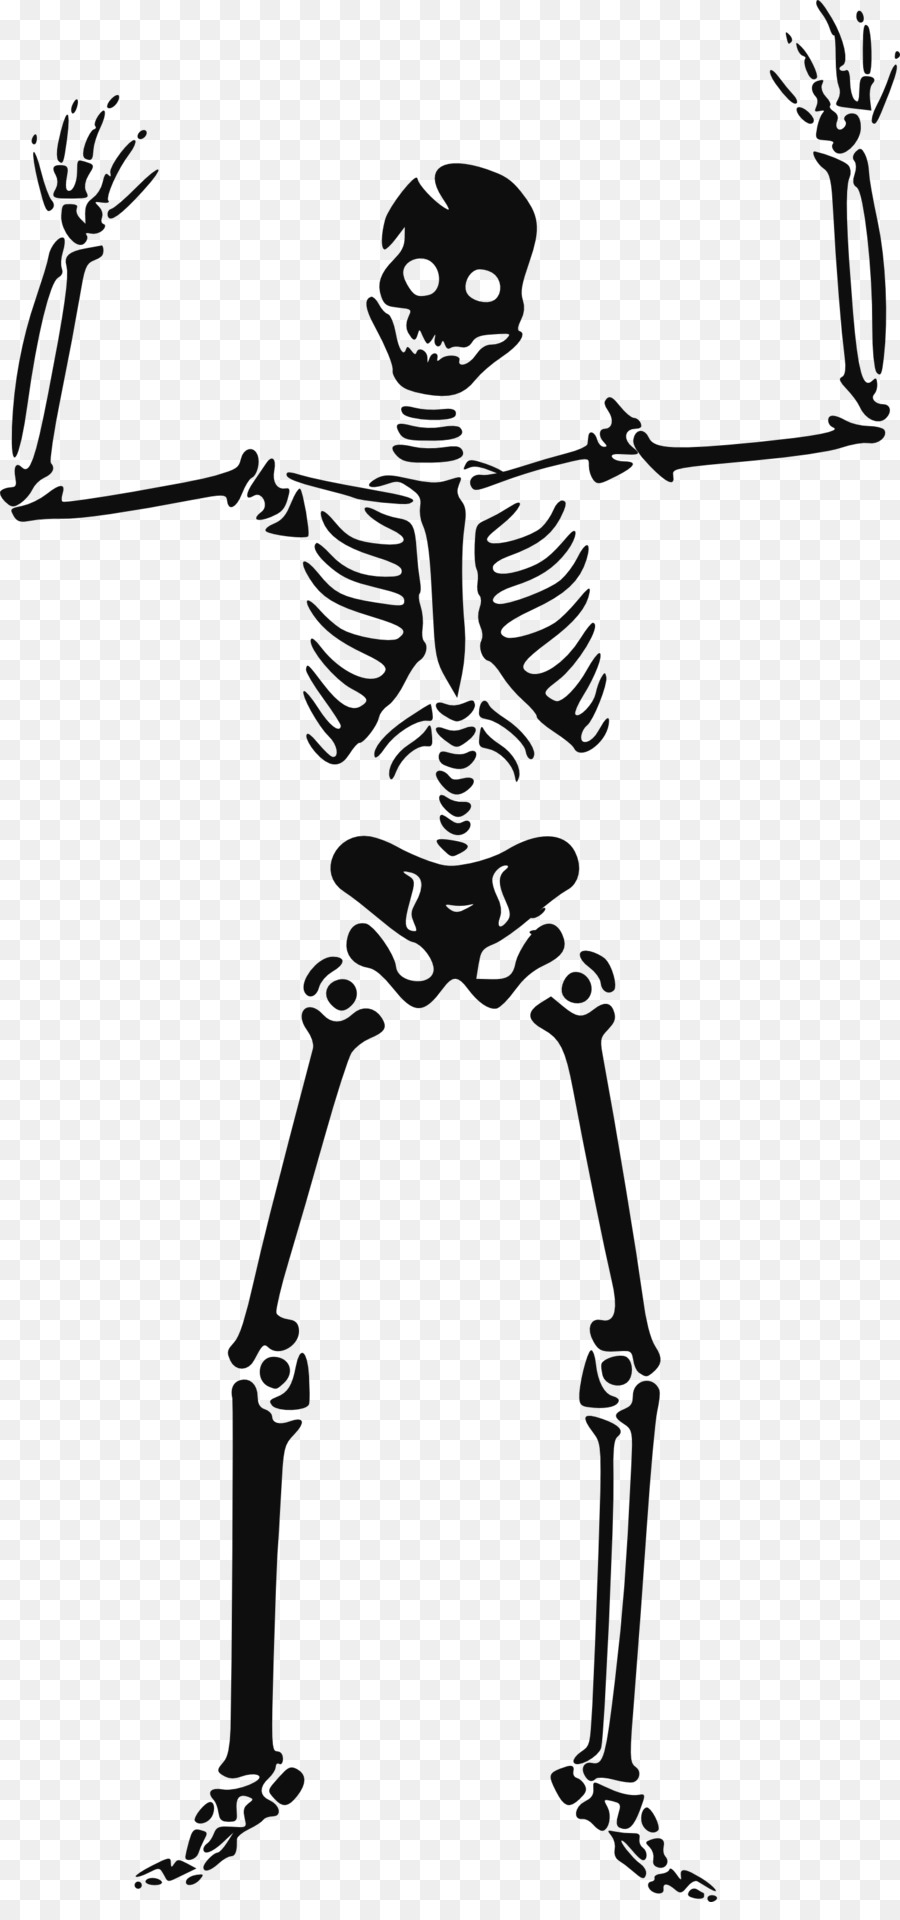 Human skeleton Skull Clip art - Skeleton png download - 1514*3200 - Free Transparent Skeleton png Download.